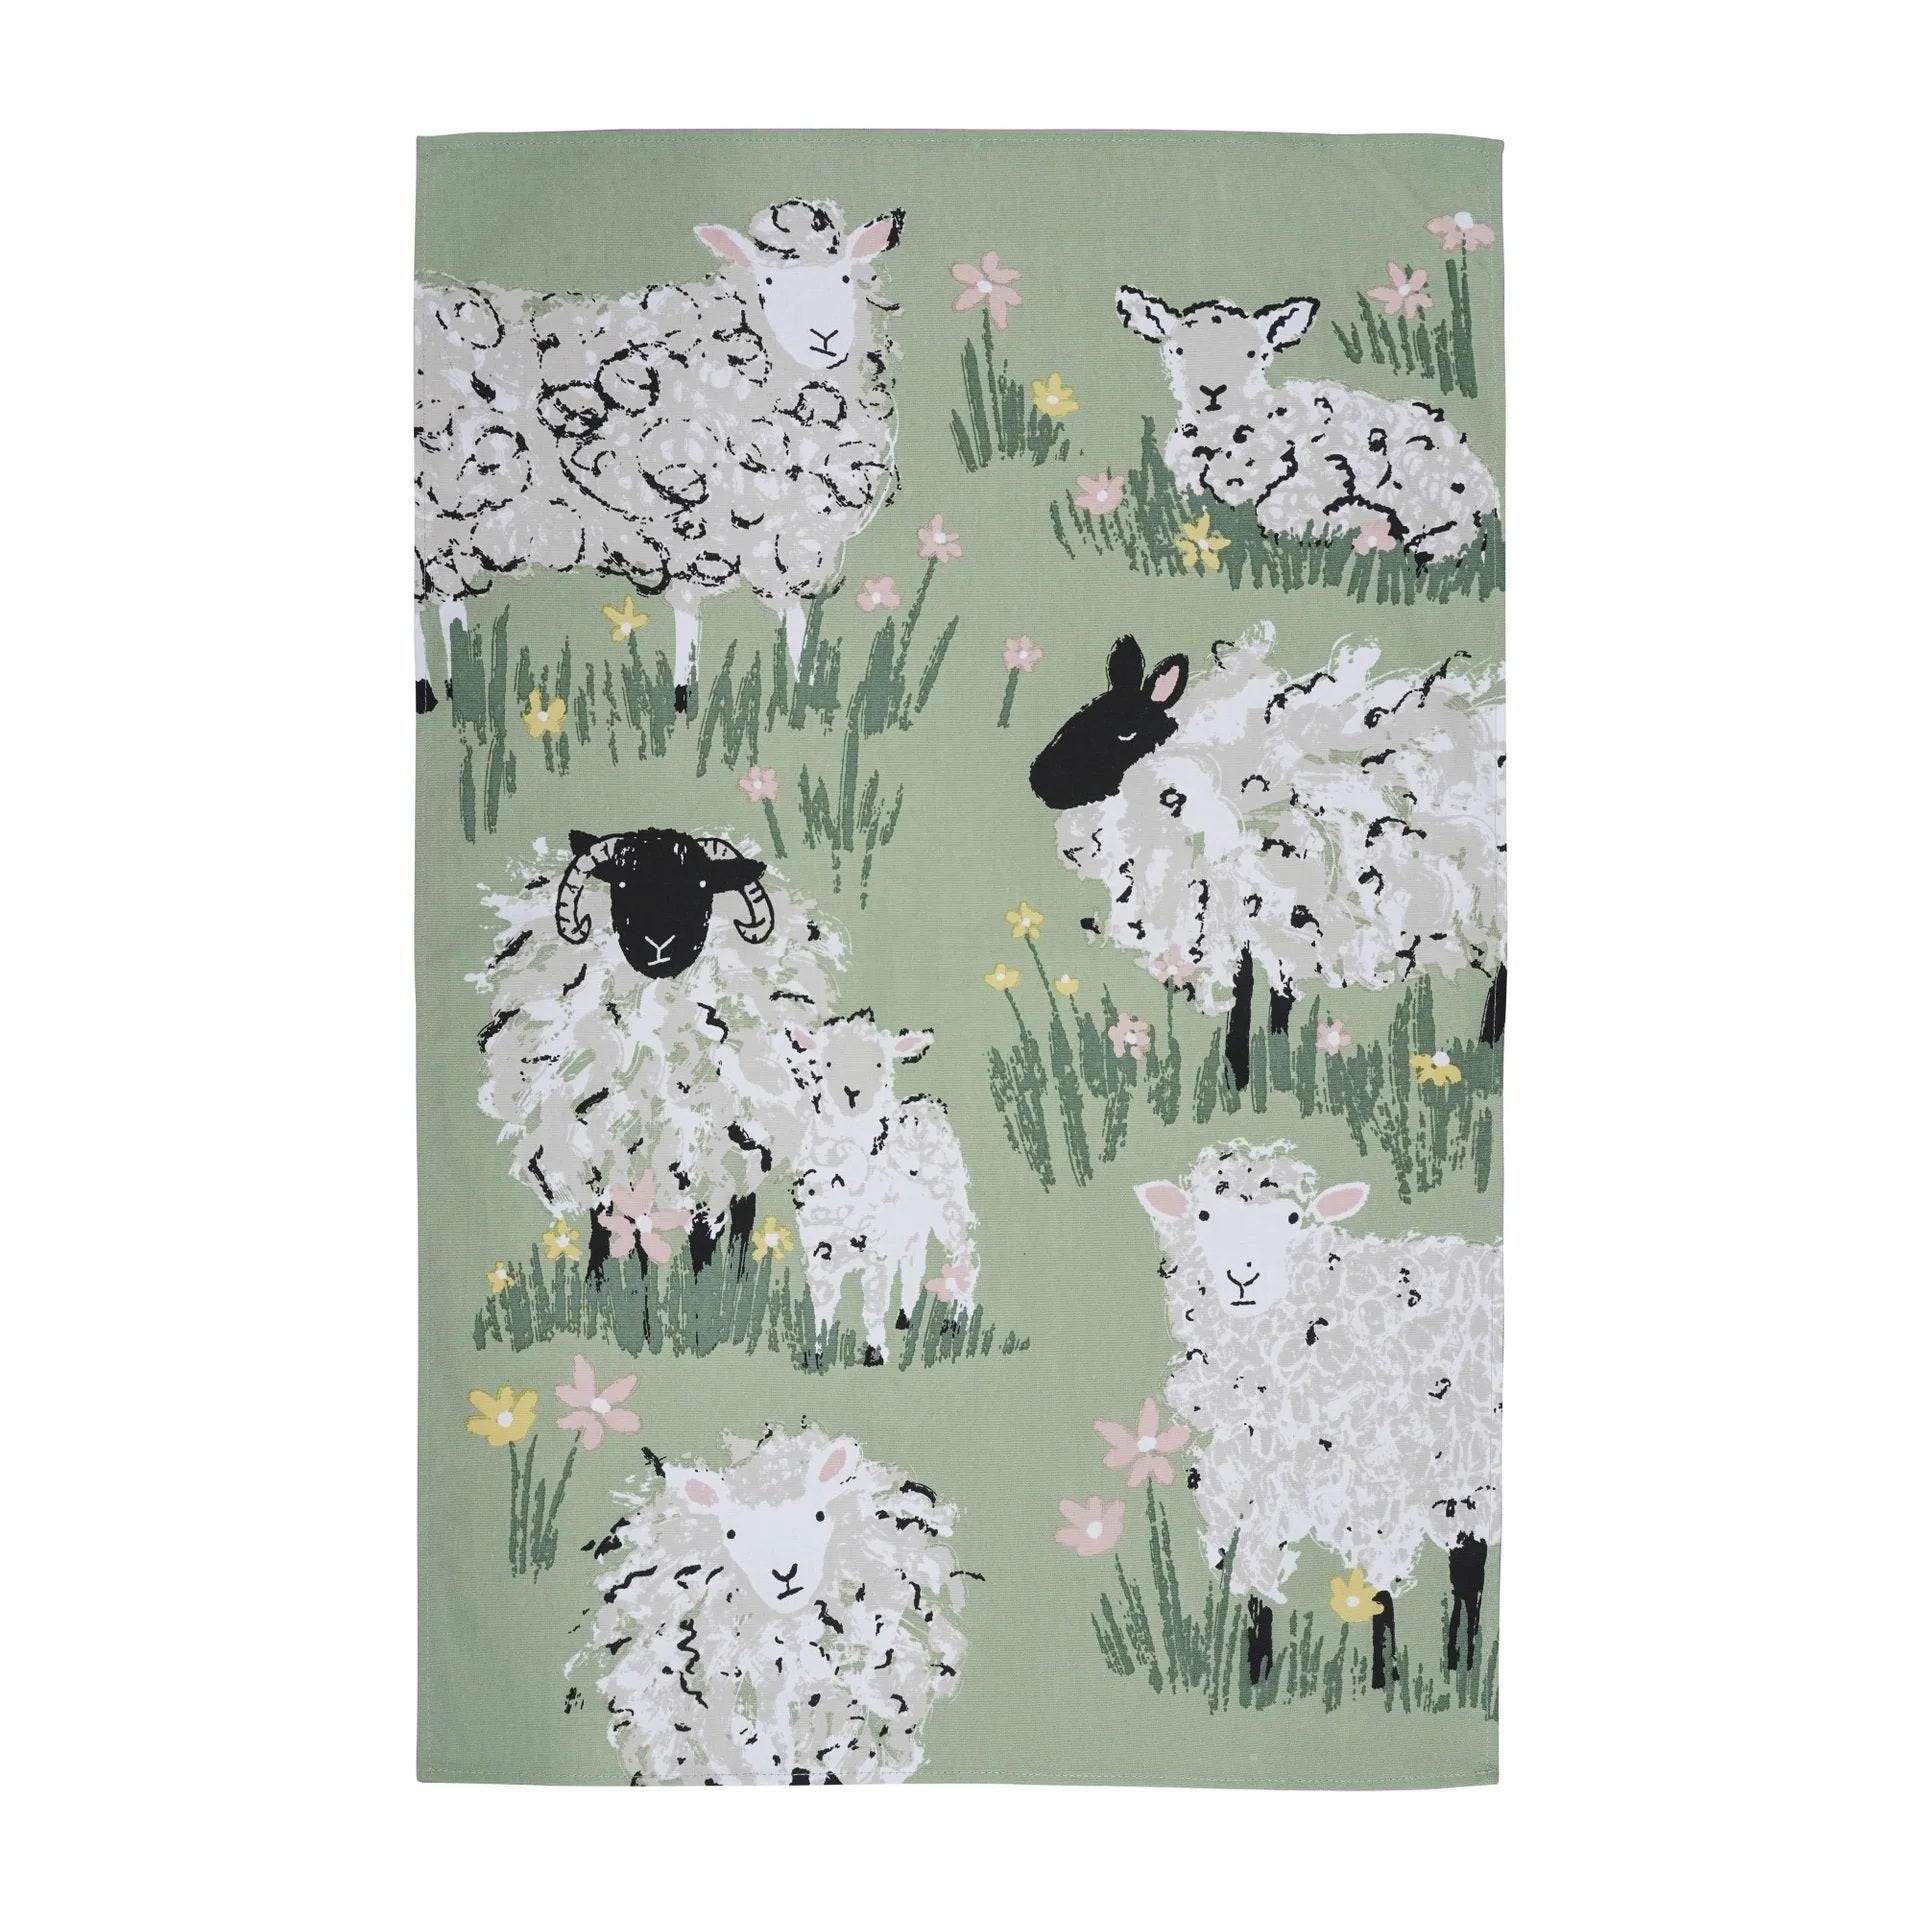 Ulster Weavers Woolly Sheep Tea Towel (100% Cotton) - green meadow with sheep